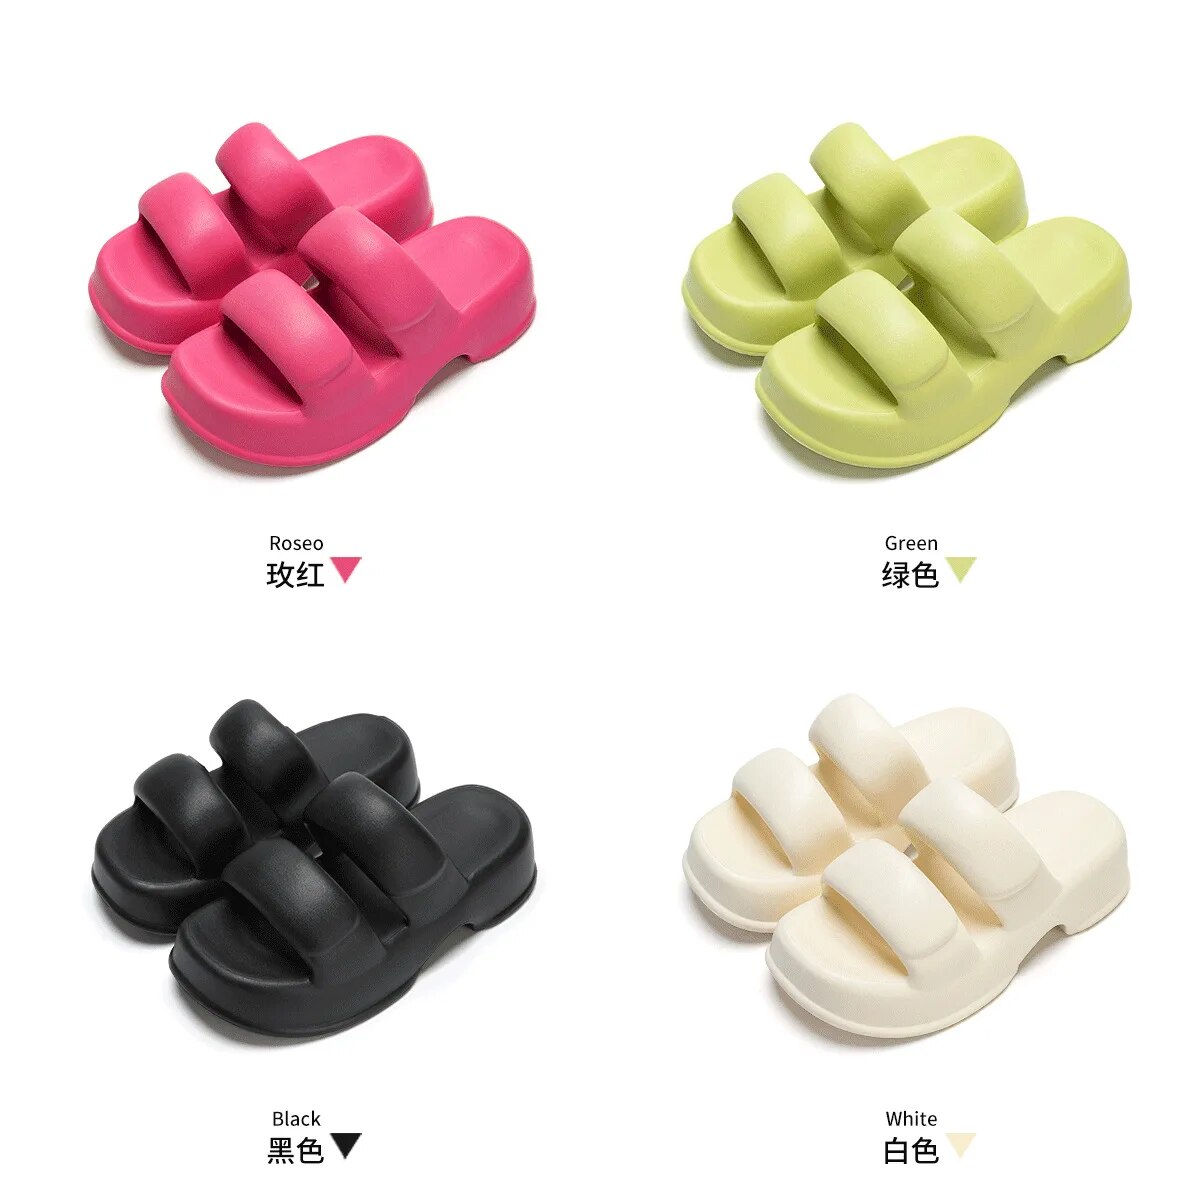 Pink Summer Women's Slide Sandals Slipper 5cm Thick Platform for Outdoor Indoor Non-Slip EVA Soft Home Slippers ShopOnlyDeal